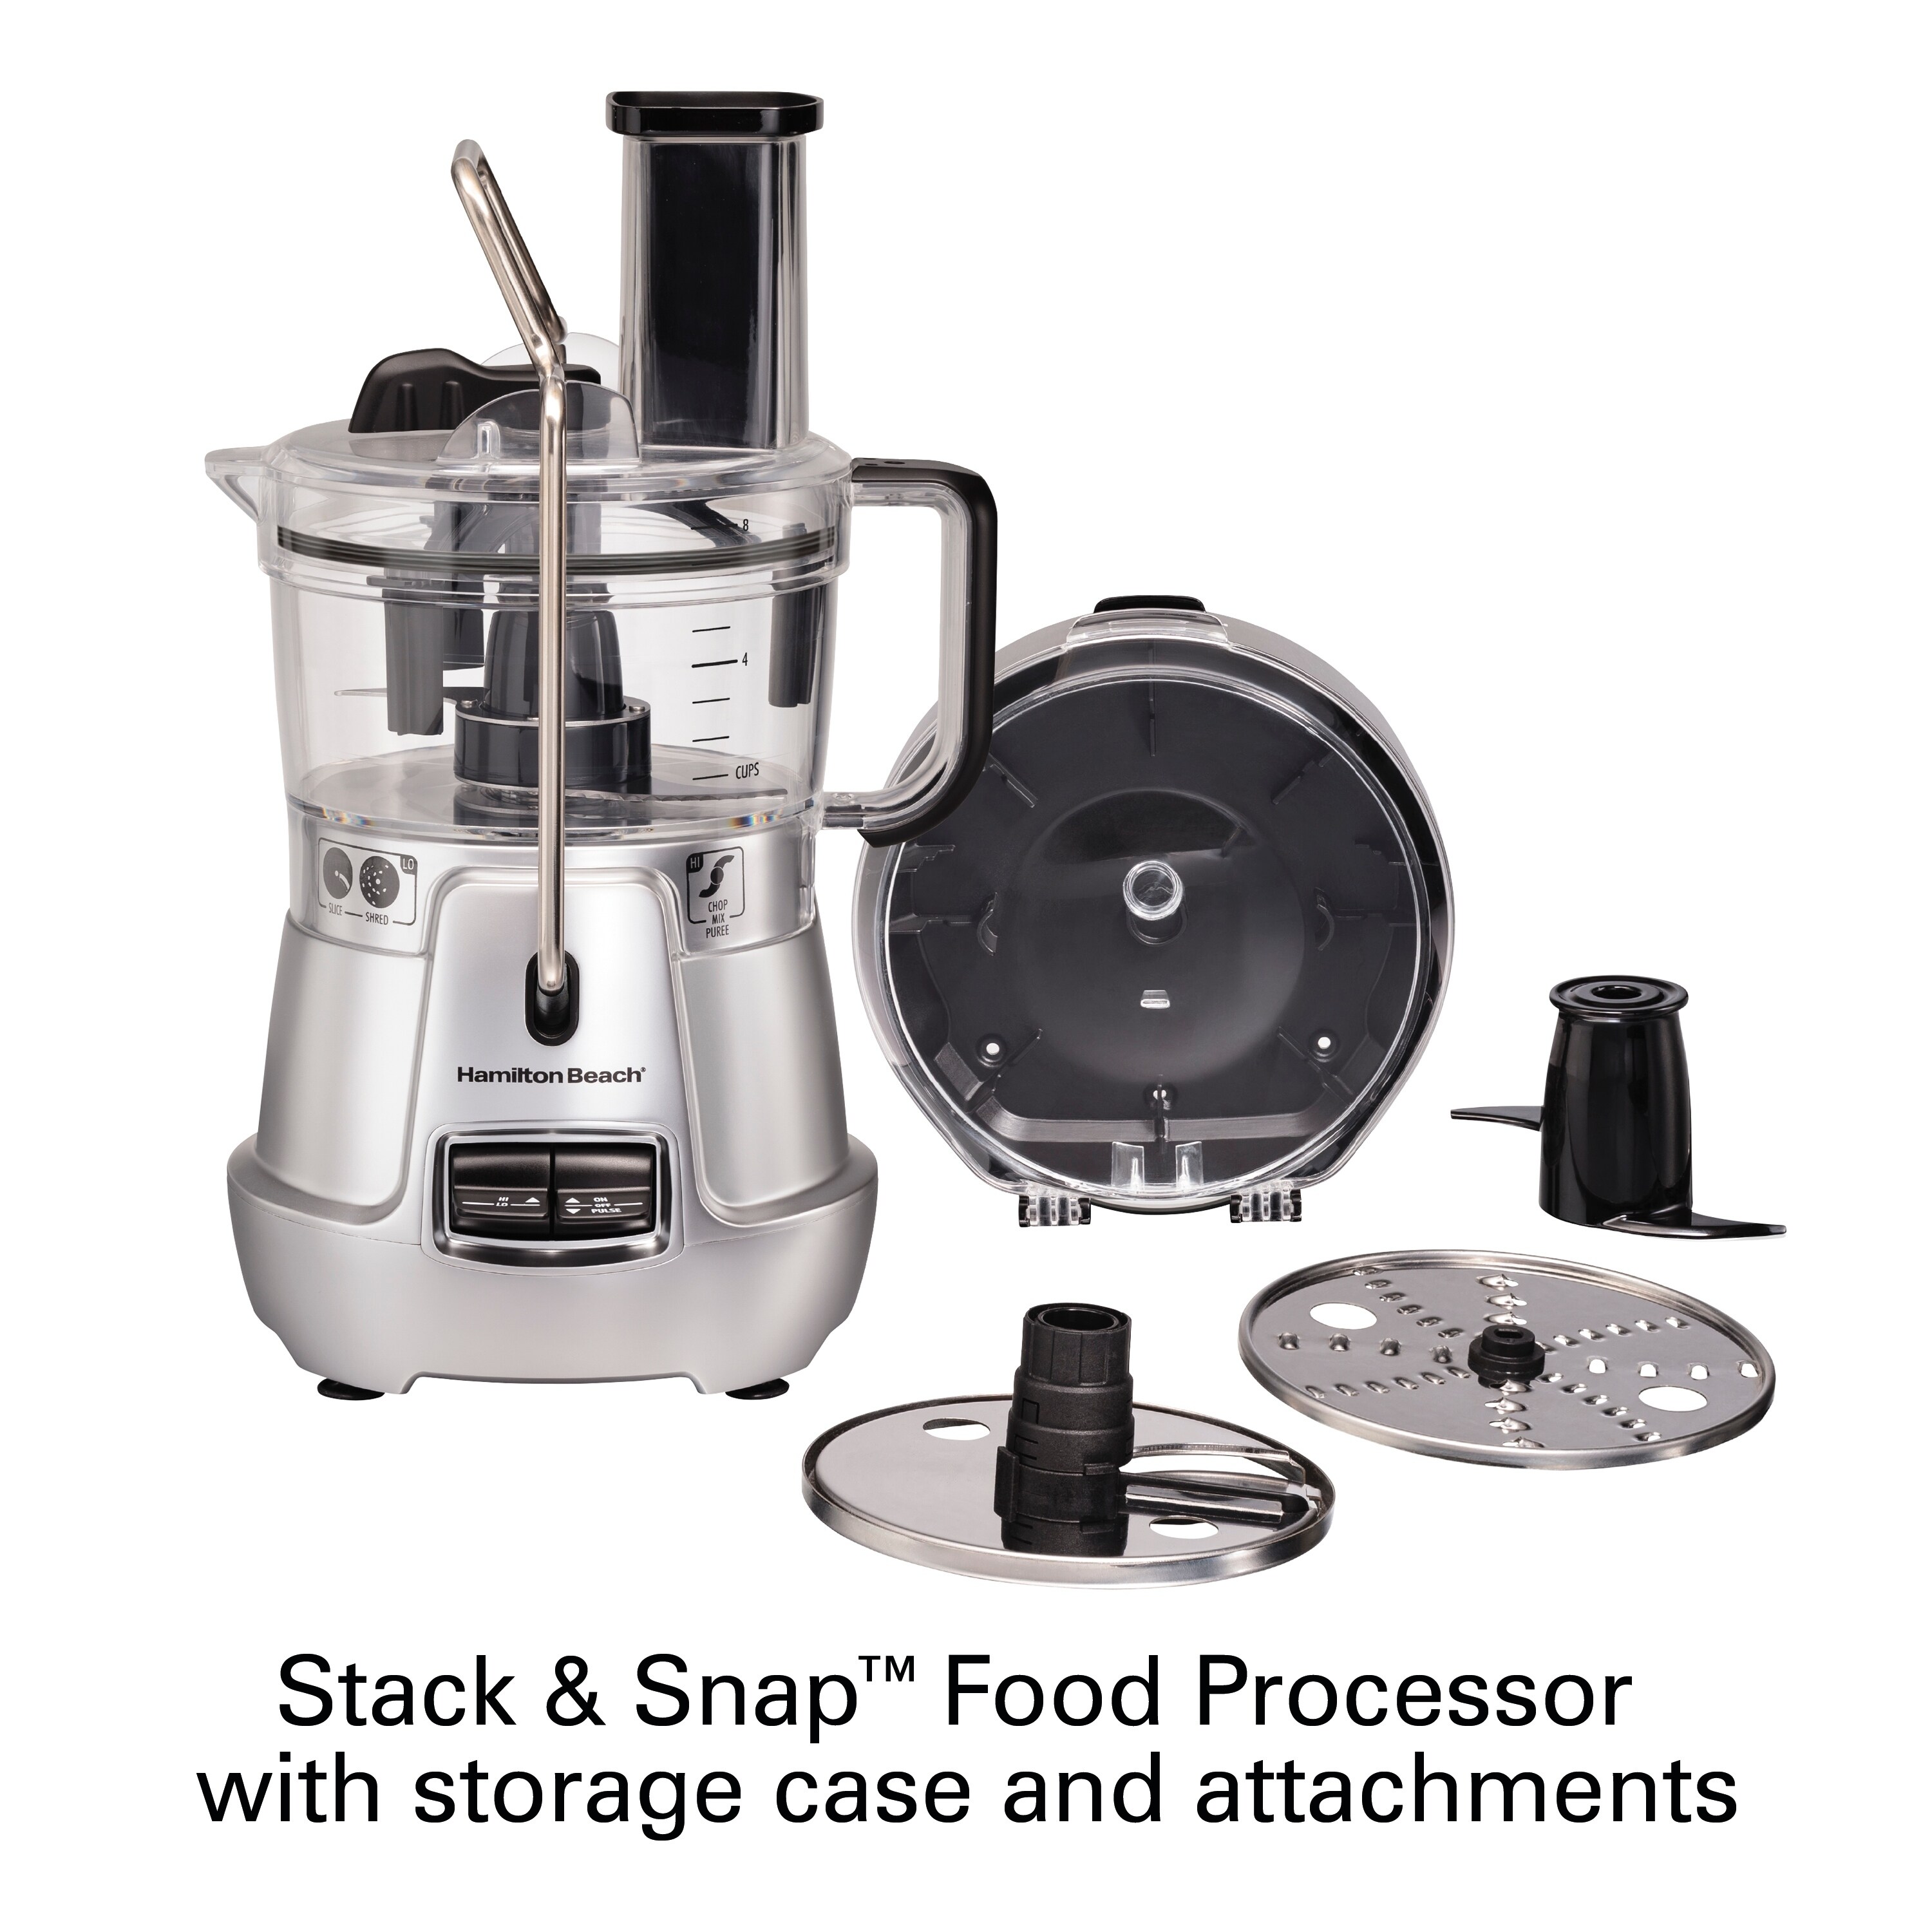 Hamilton Beach Stack & Snap 8-cup Food Processor with Bowl Scraper